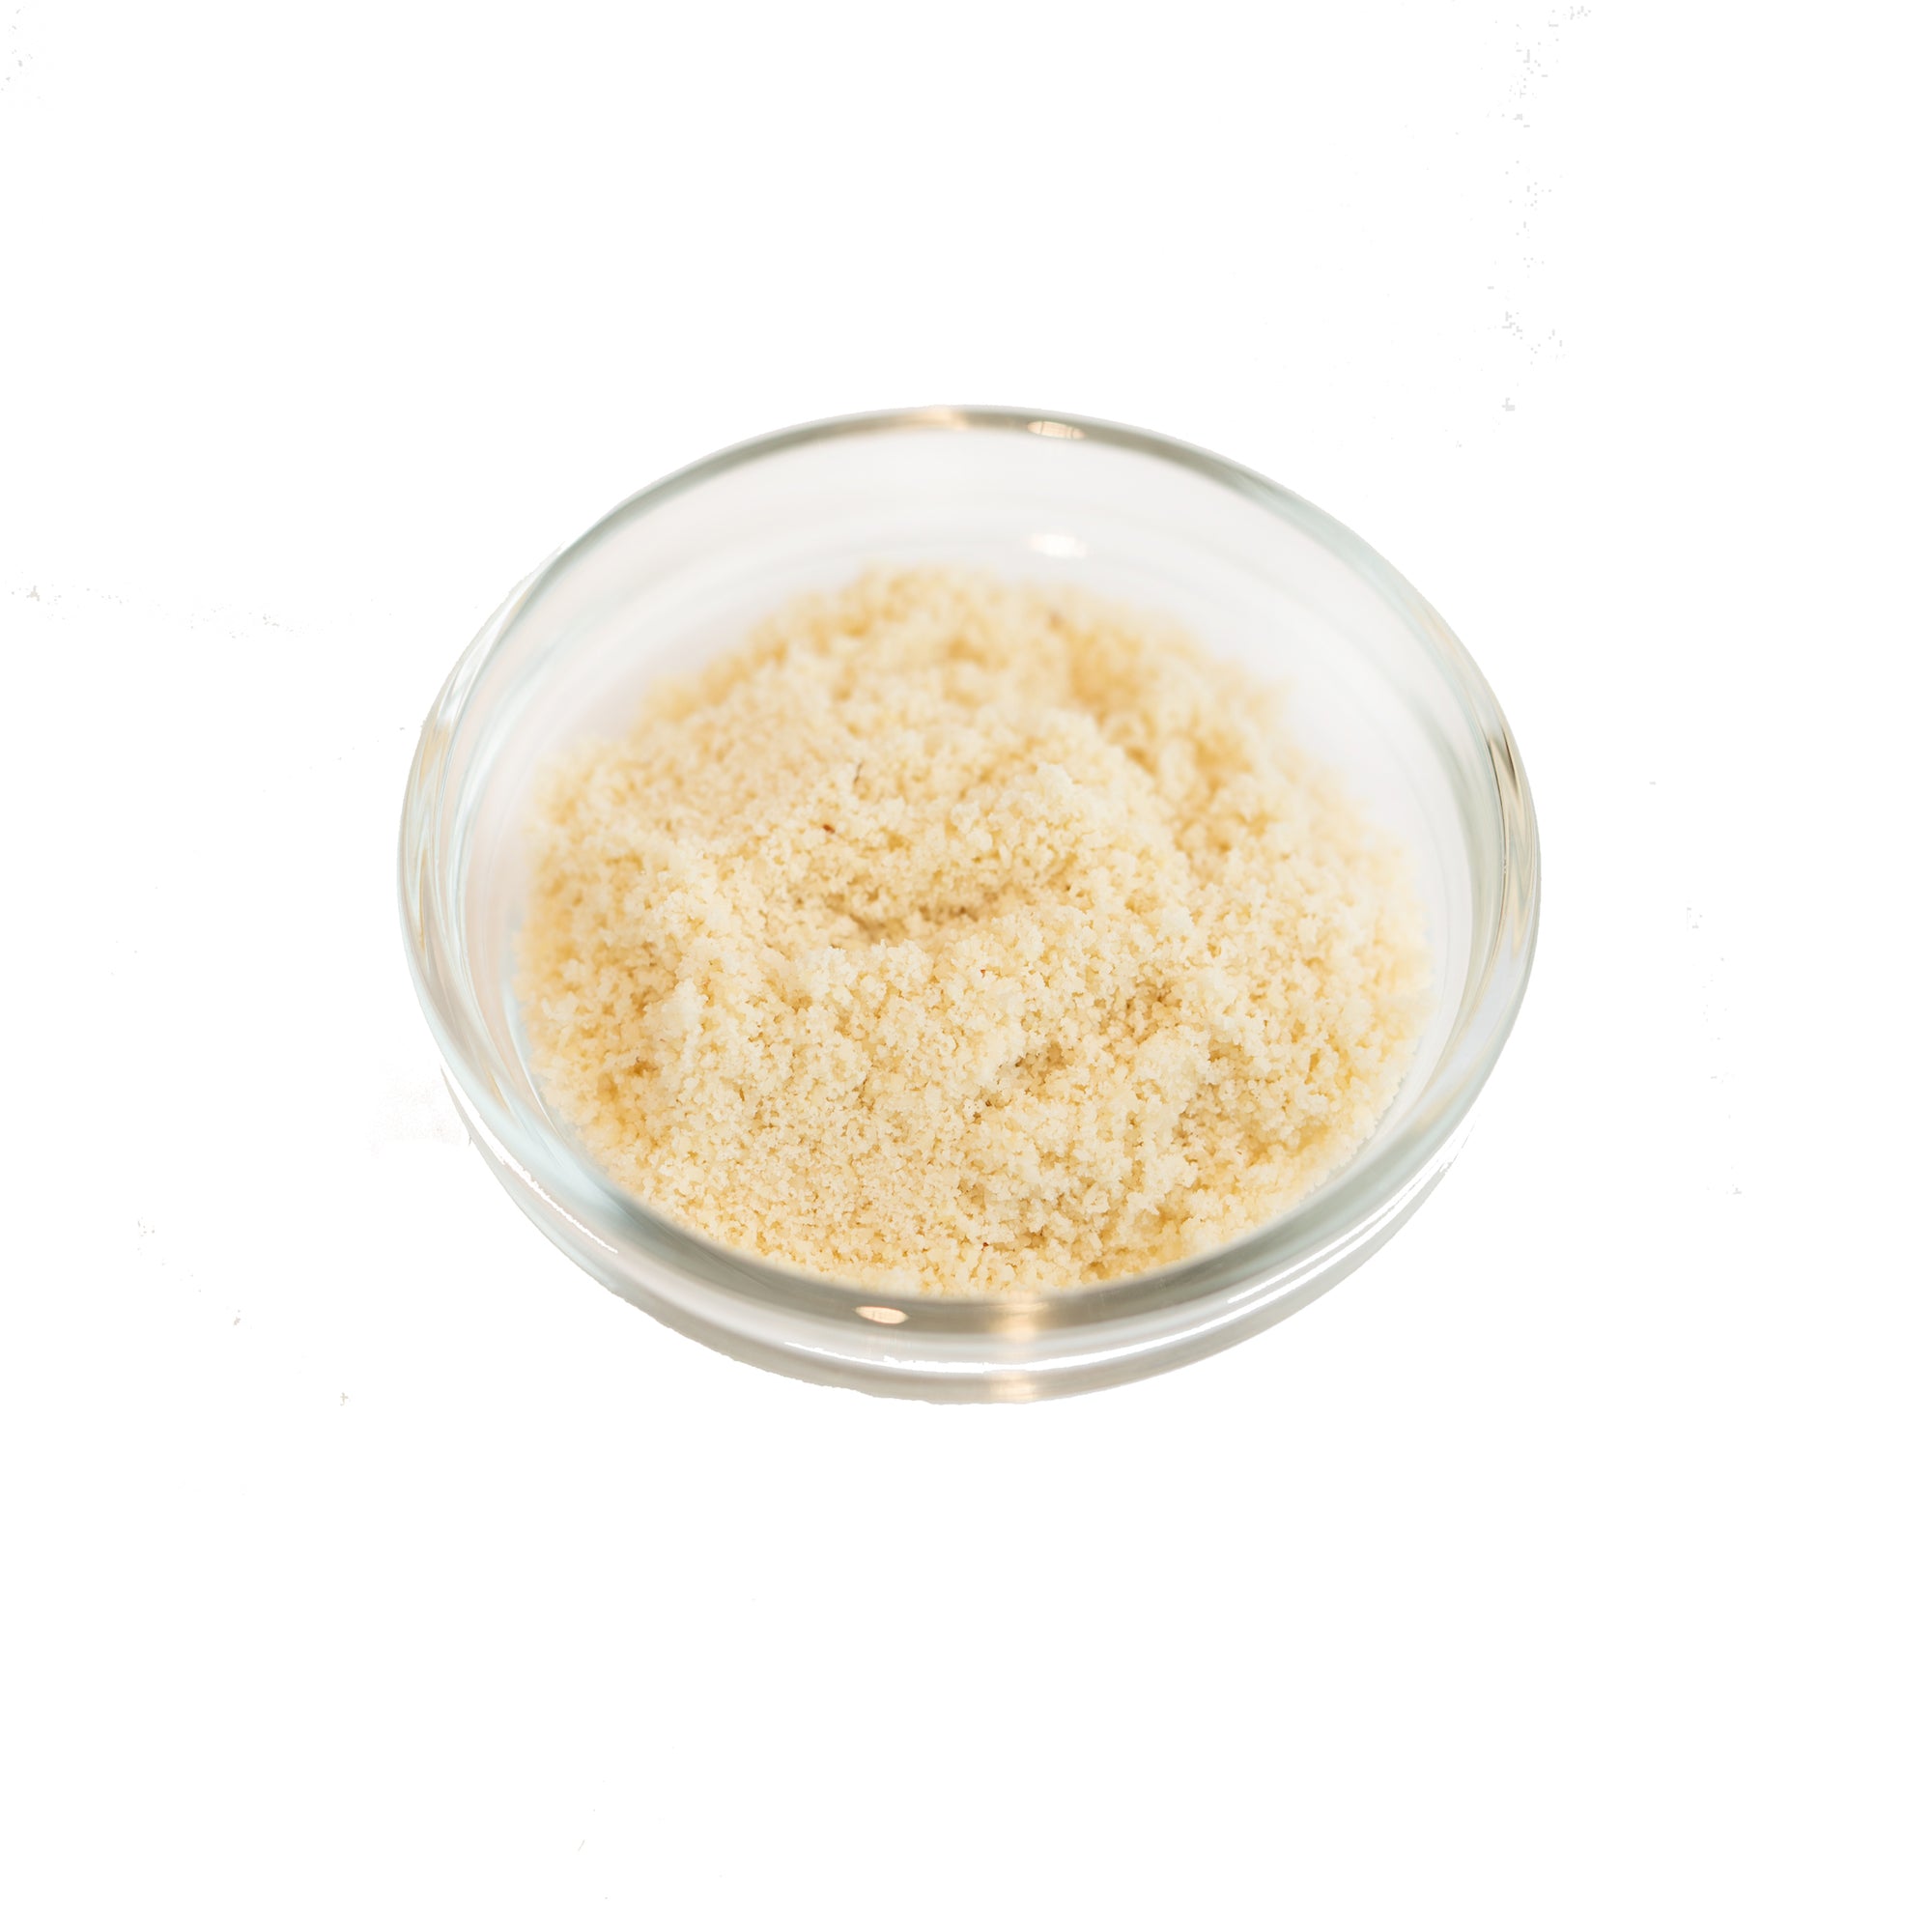 SUNNYGEM Almond Powder, Natural Fine Flour